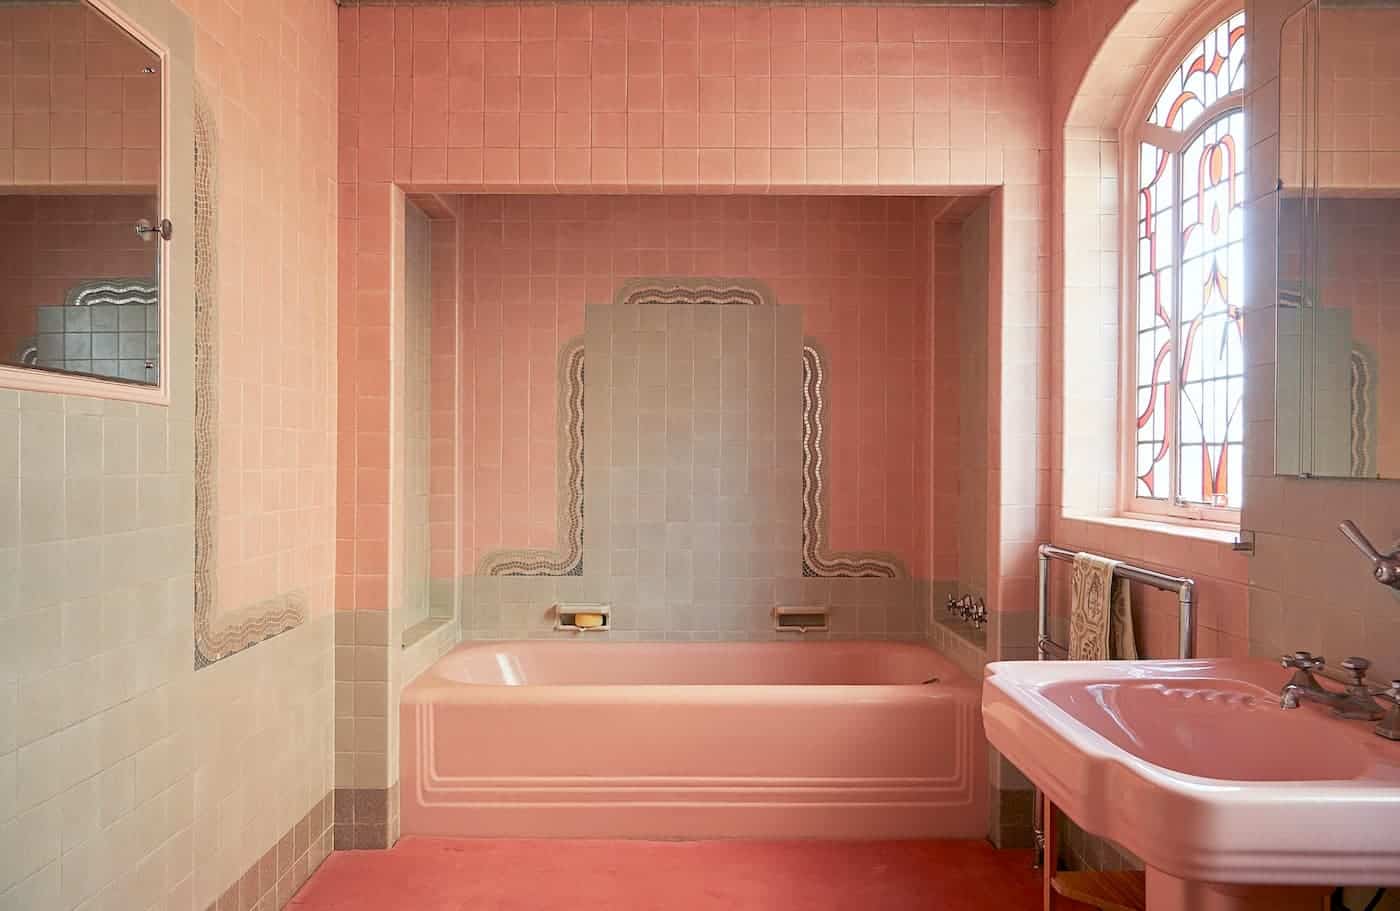 Lillian-N3 Unusual Pink Bathroom Location - The Location Guys